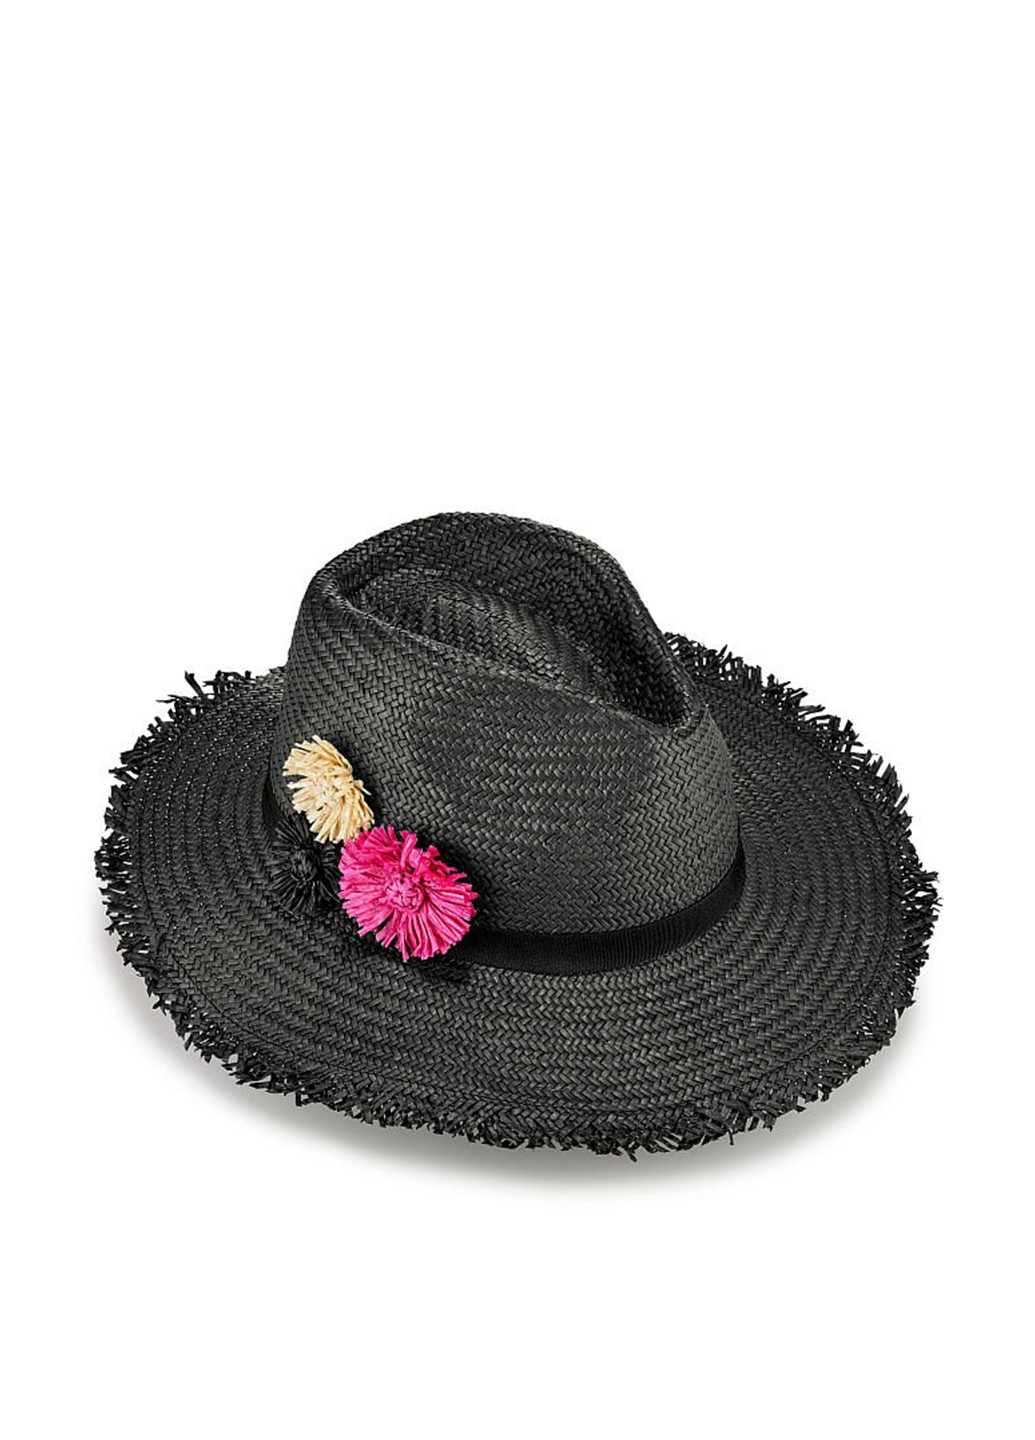 Шляпа Victoria's Secret федора однотонная чёрная пляжная бумага